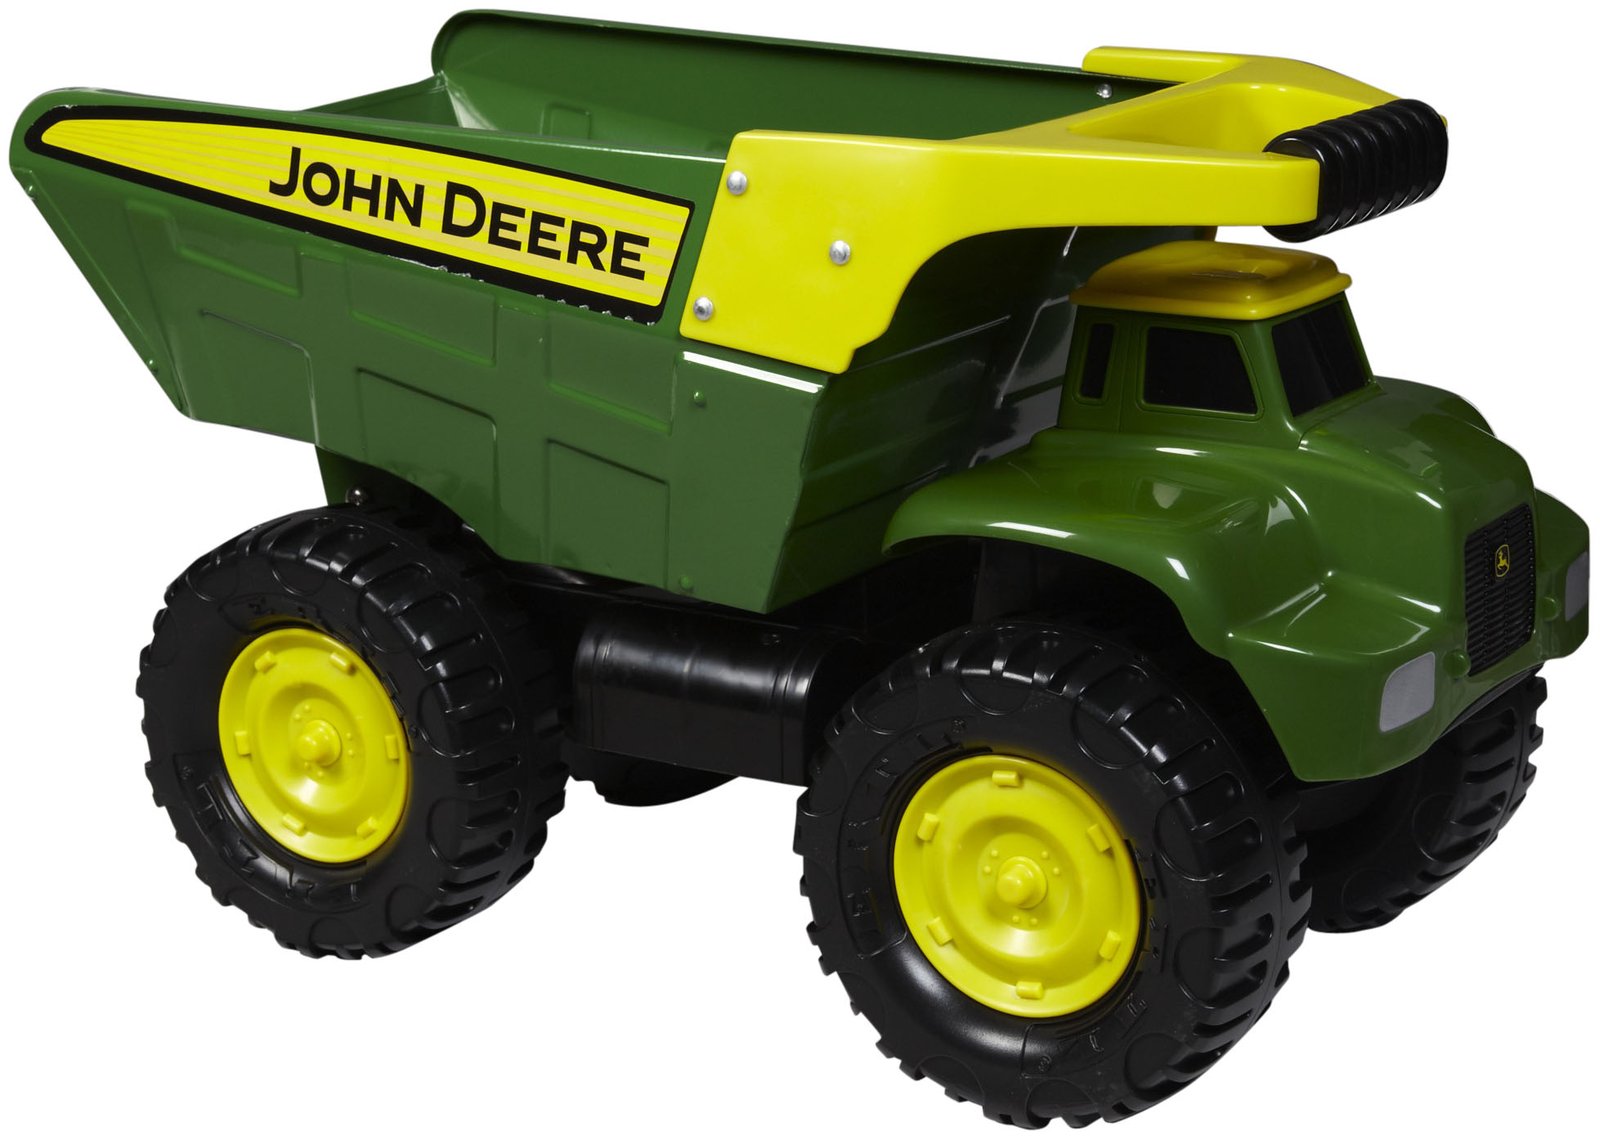 ERTL John Deere Big Scoop Dump Truck 21 - Free Shipping